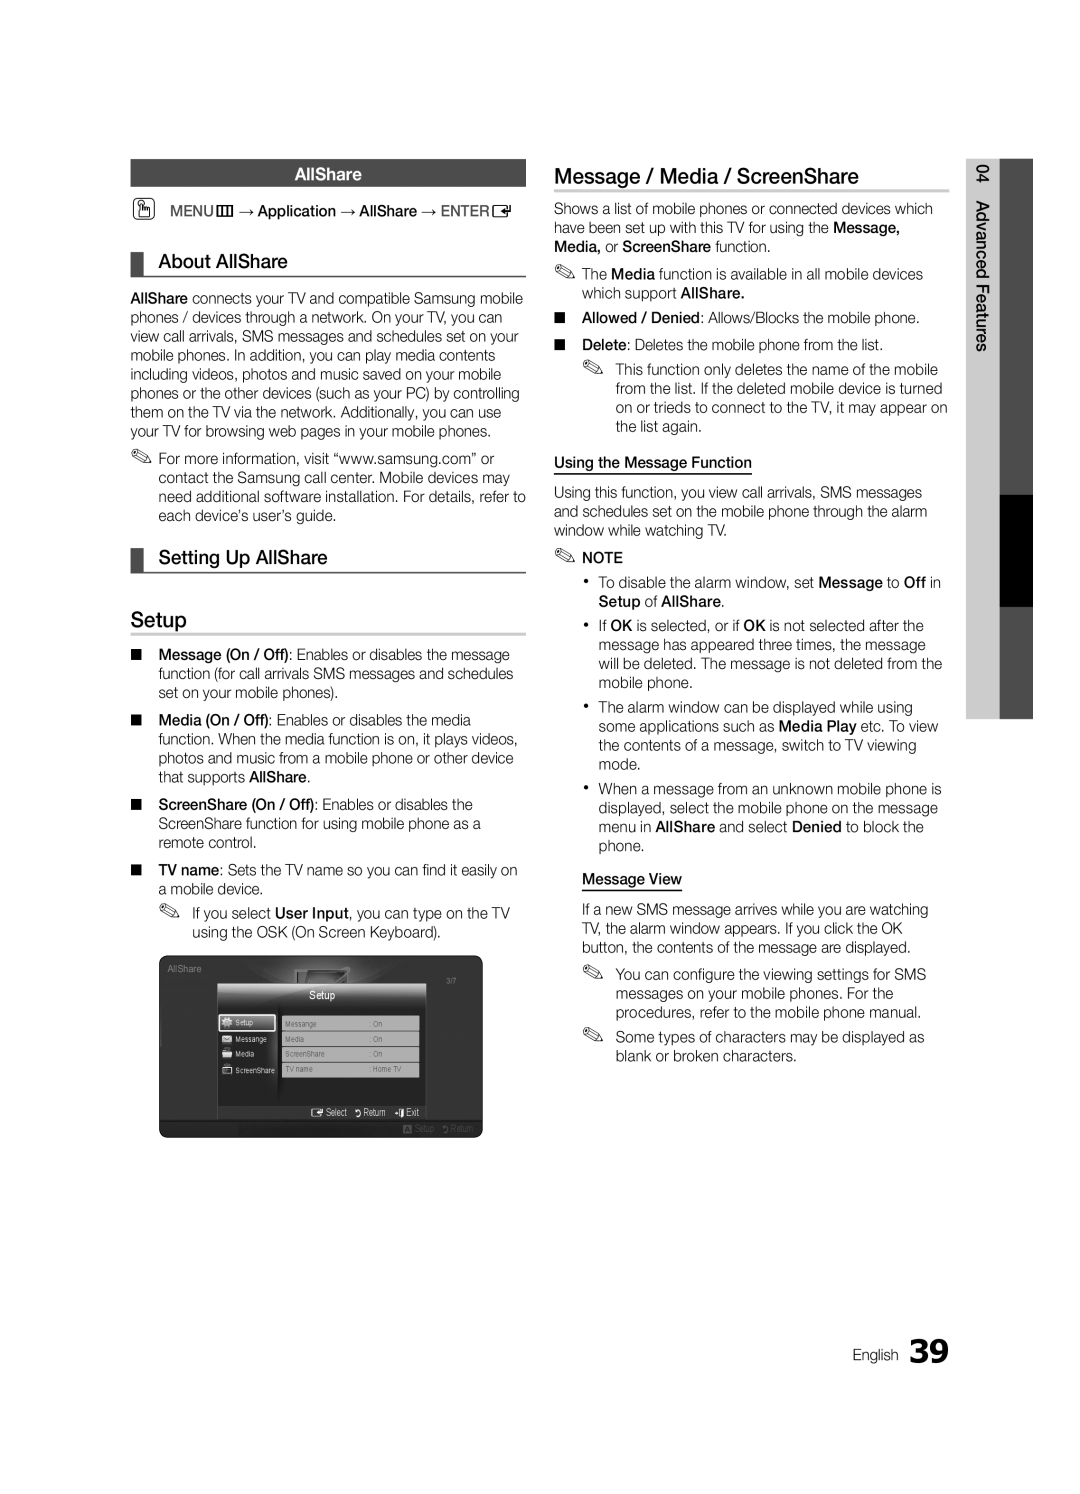 Samsung LN32C550 user manual Setup, Message / Media / ScreenShare, About AllShare, Setting Up AllShare 